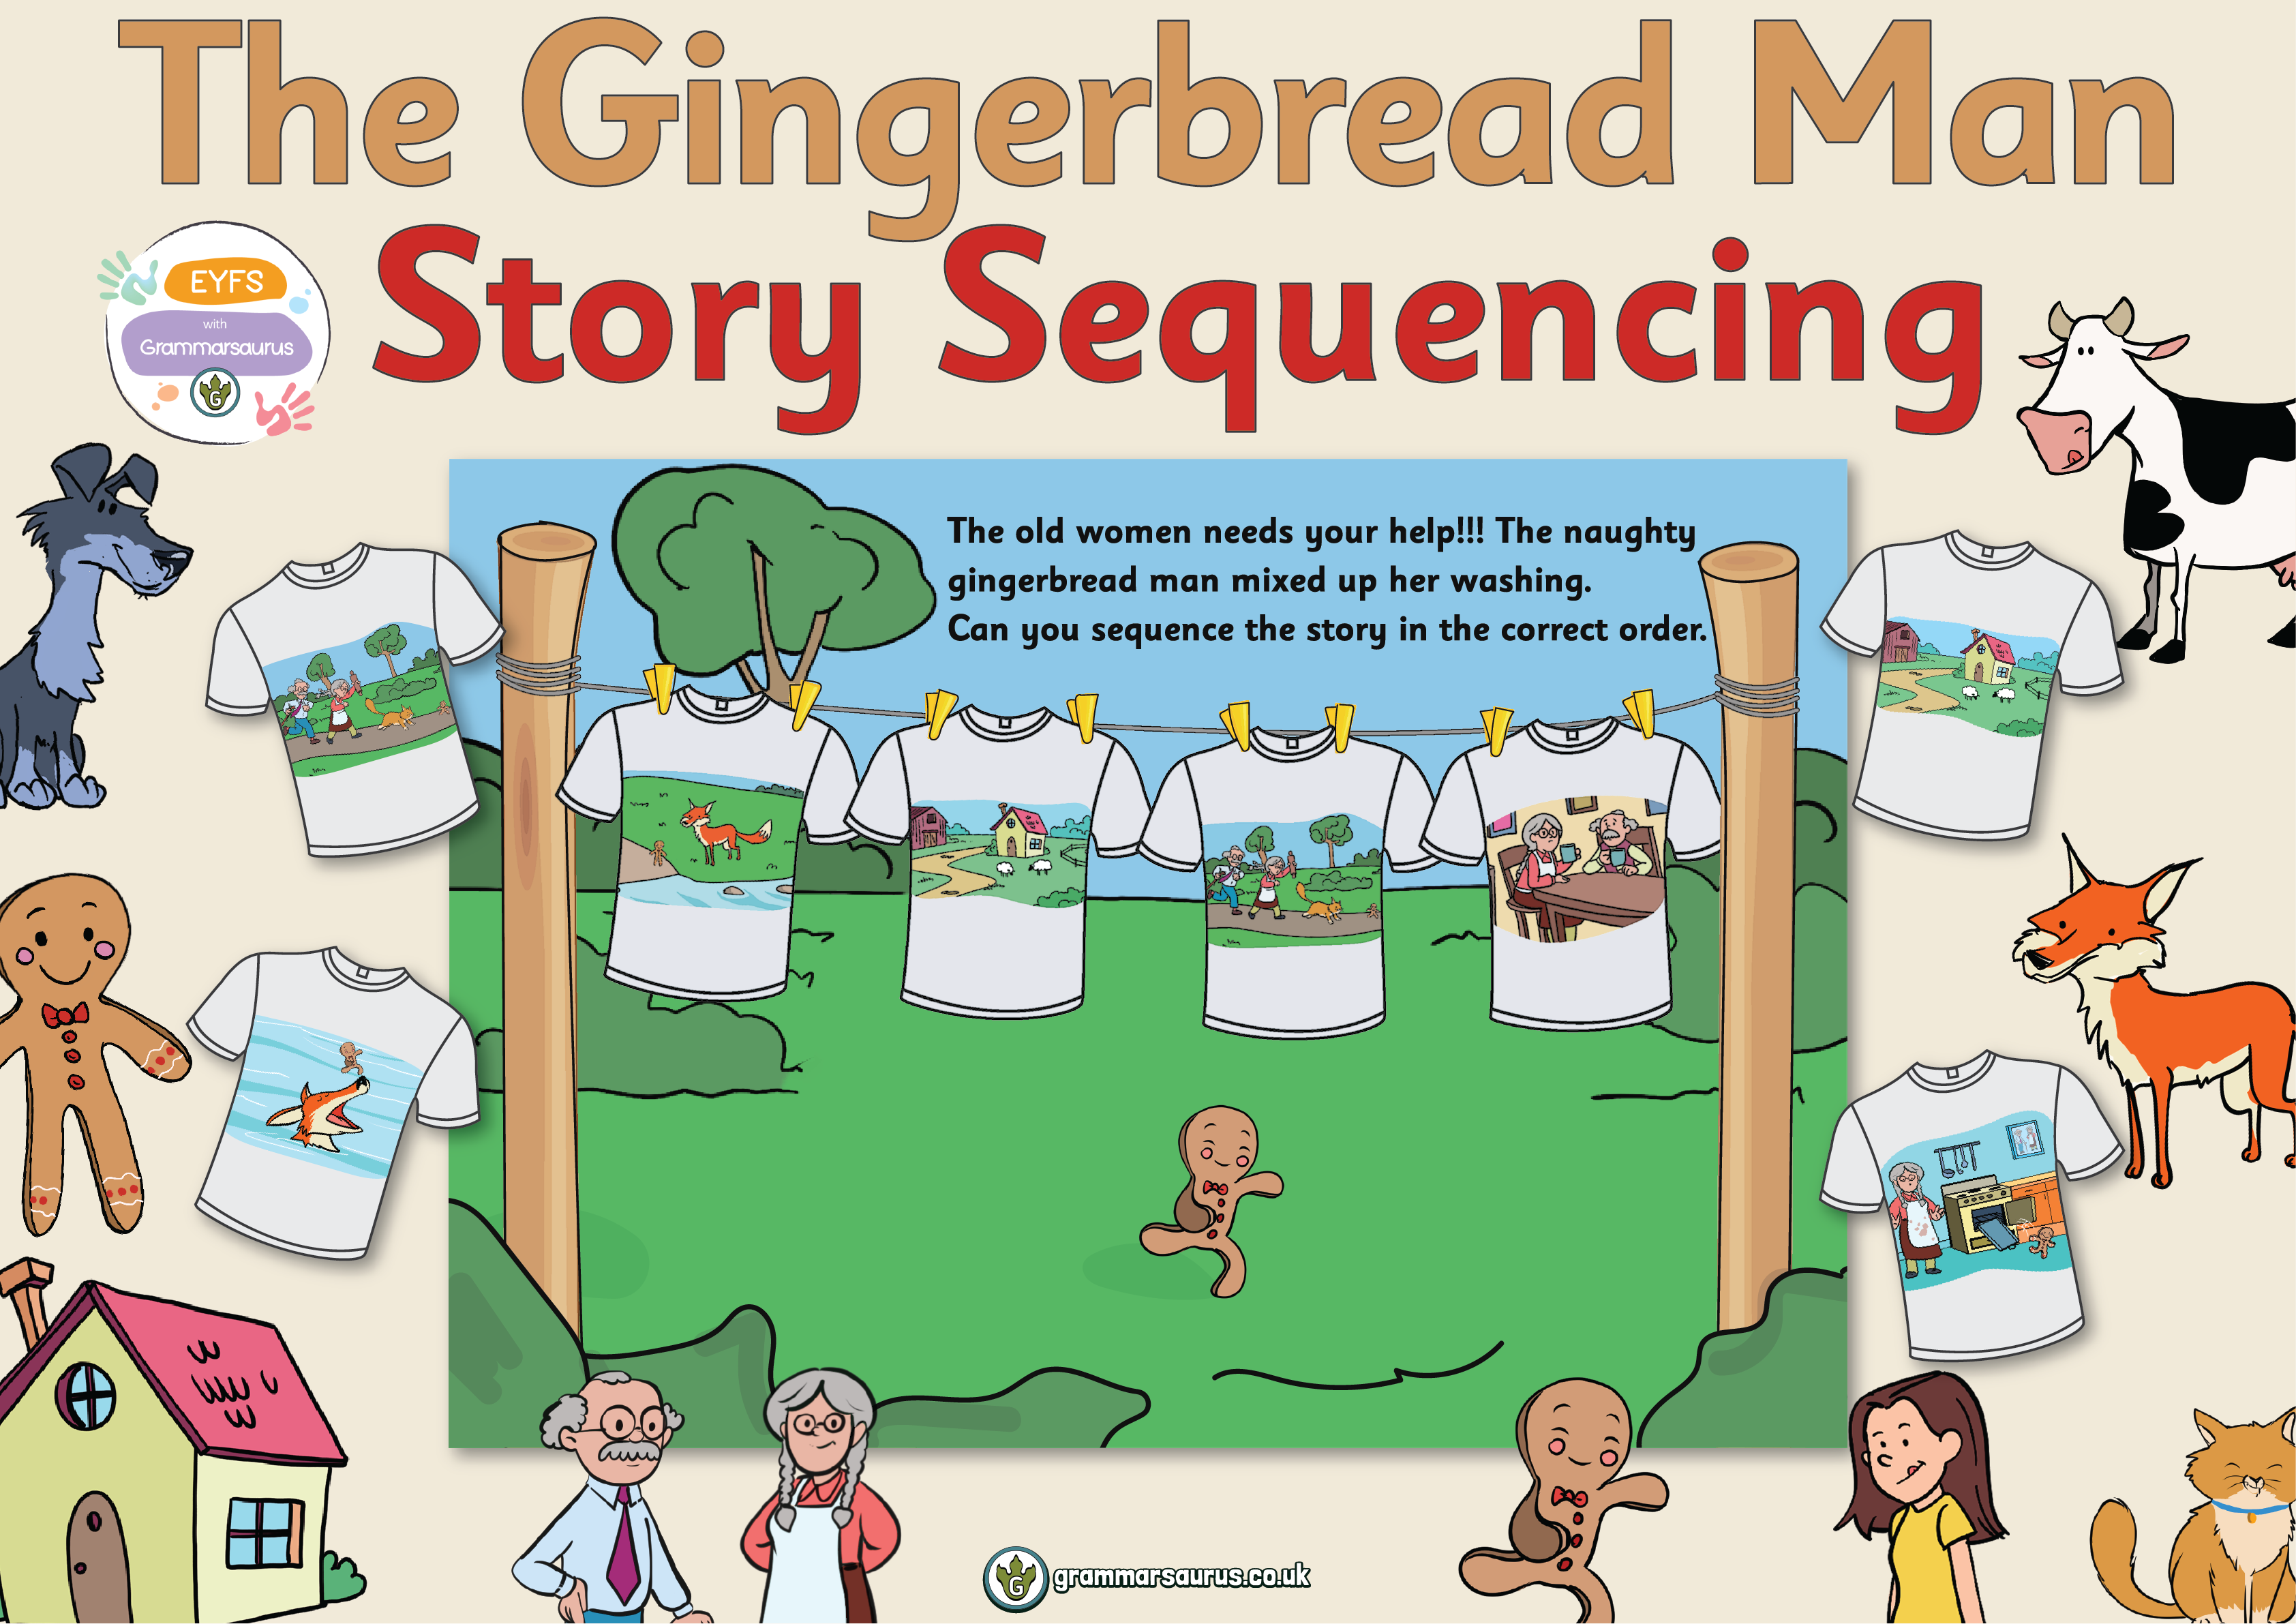 eyfs-the-gingerbread-man-story-sequencing-grammarsaurus